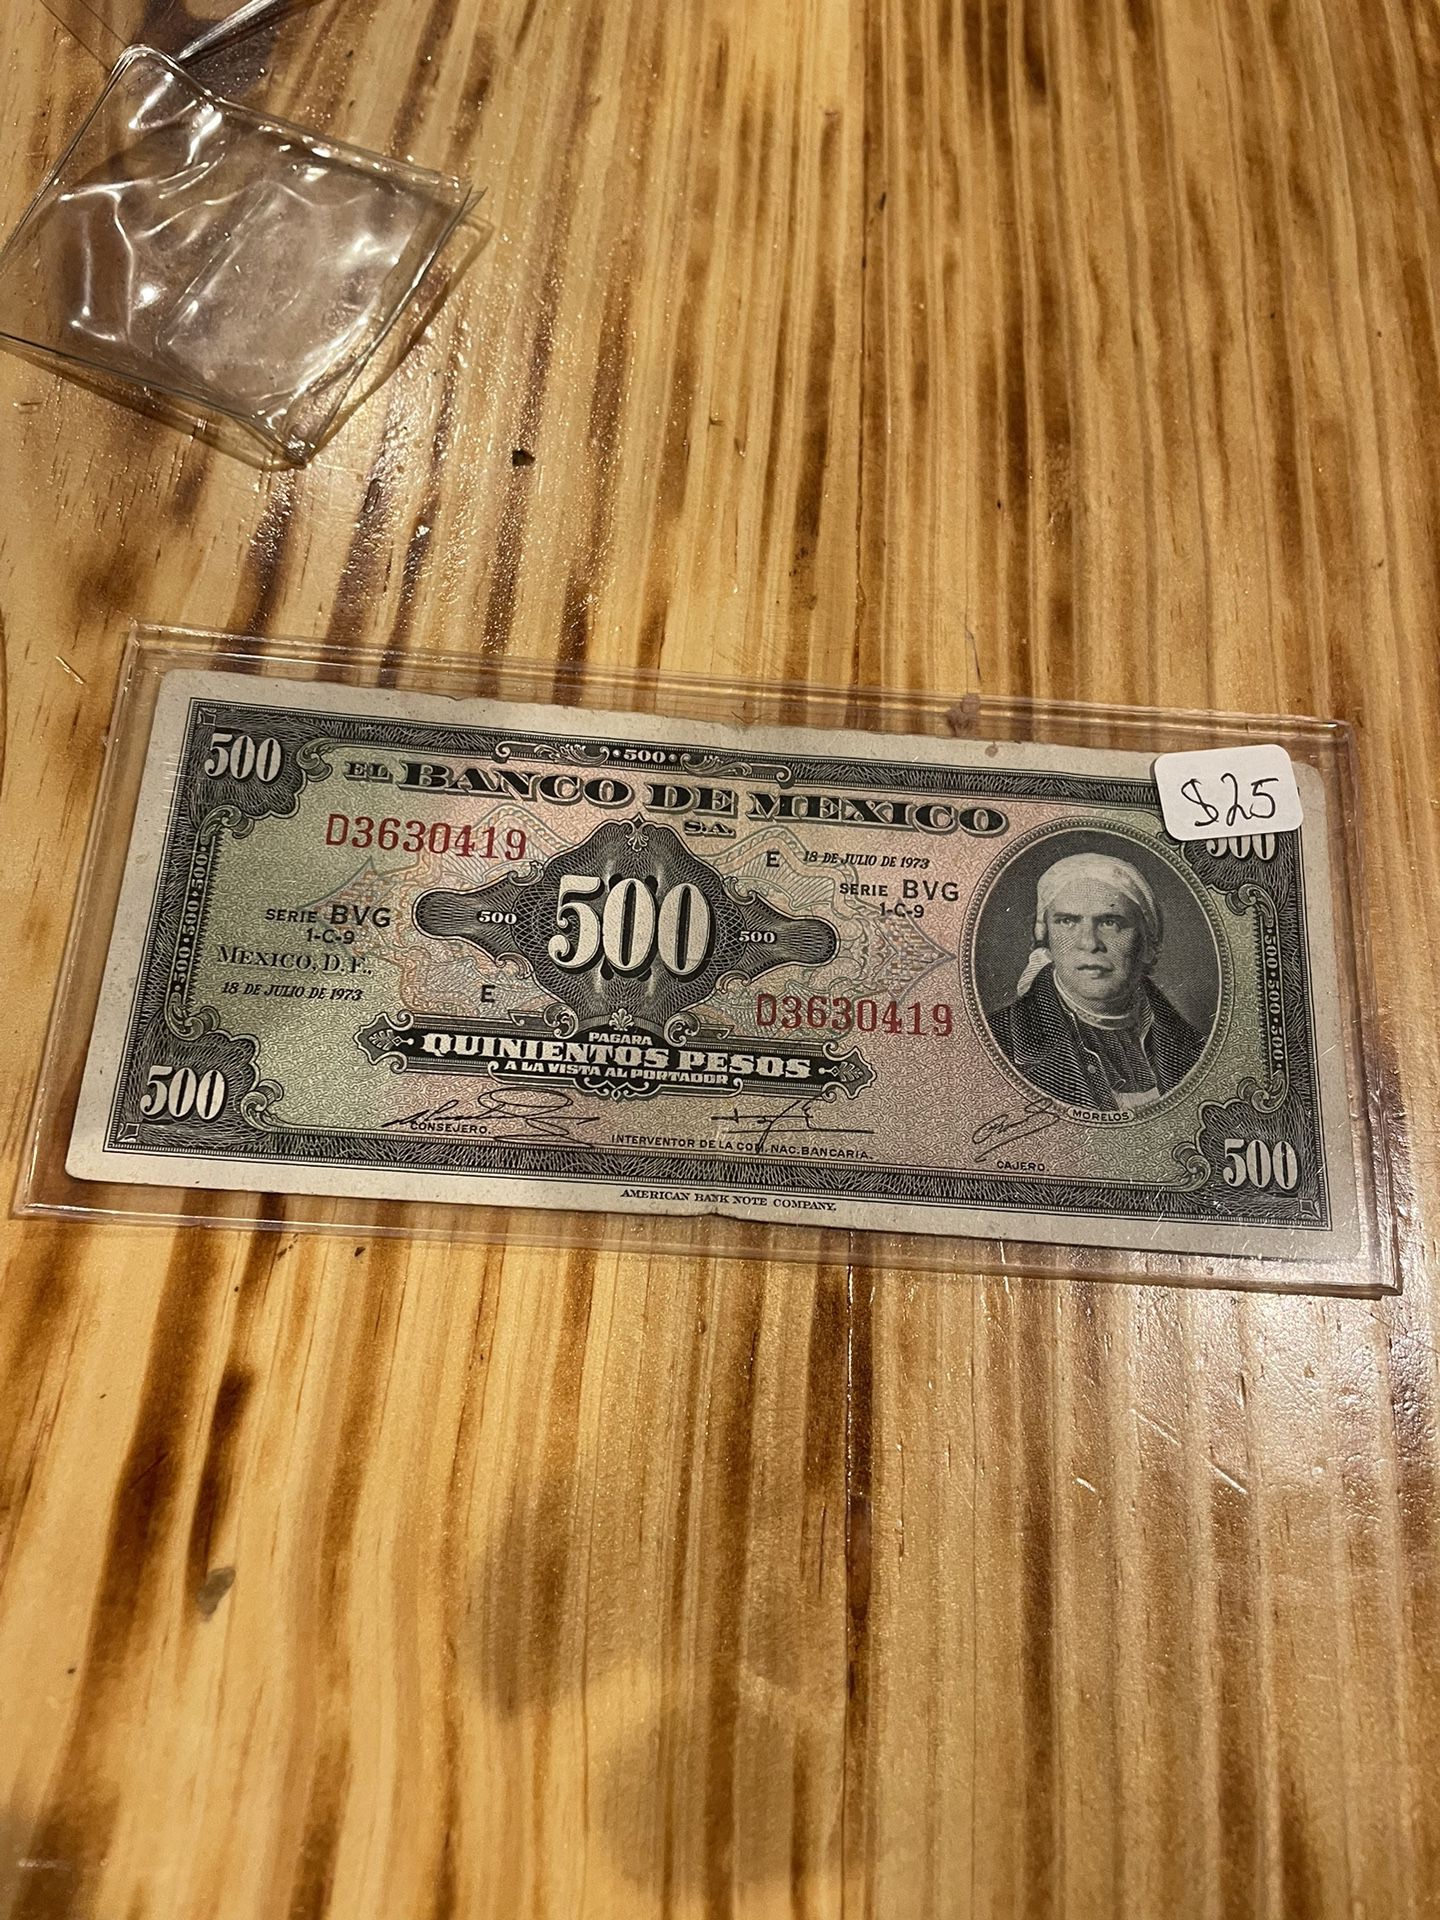 500 Pesos Mexican